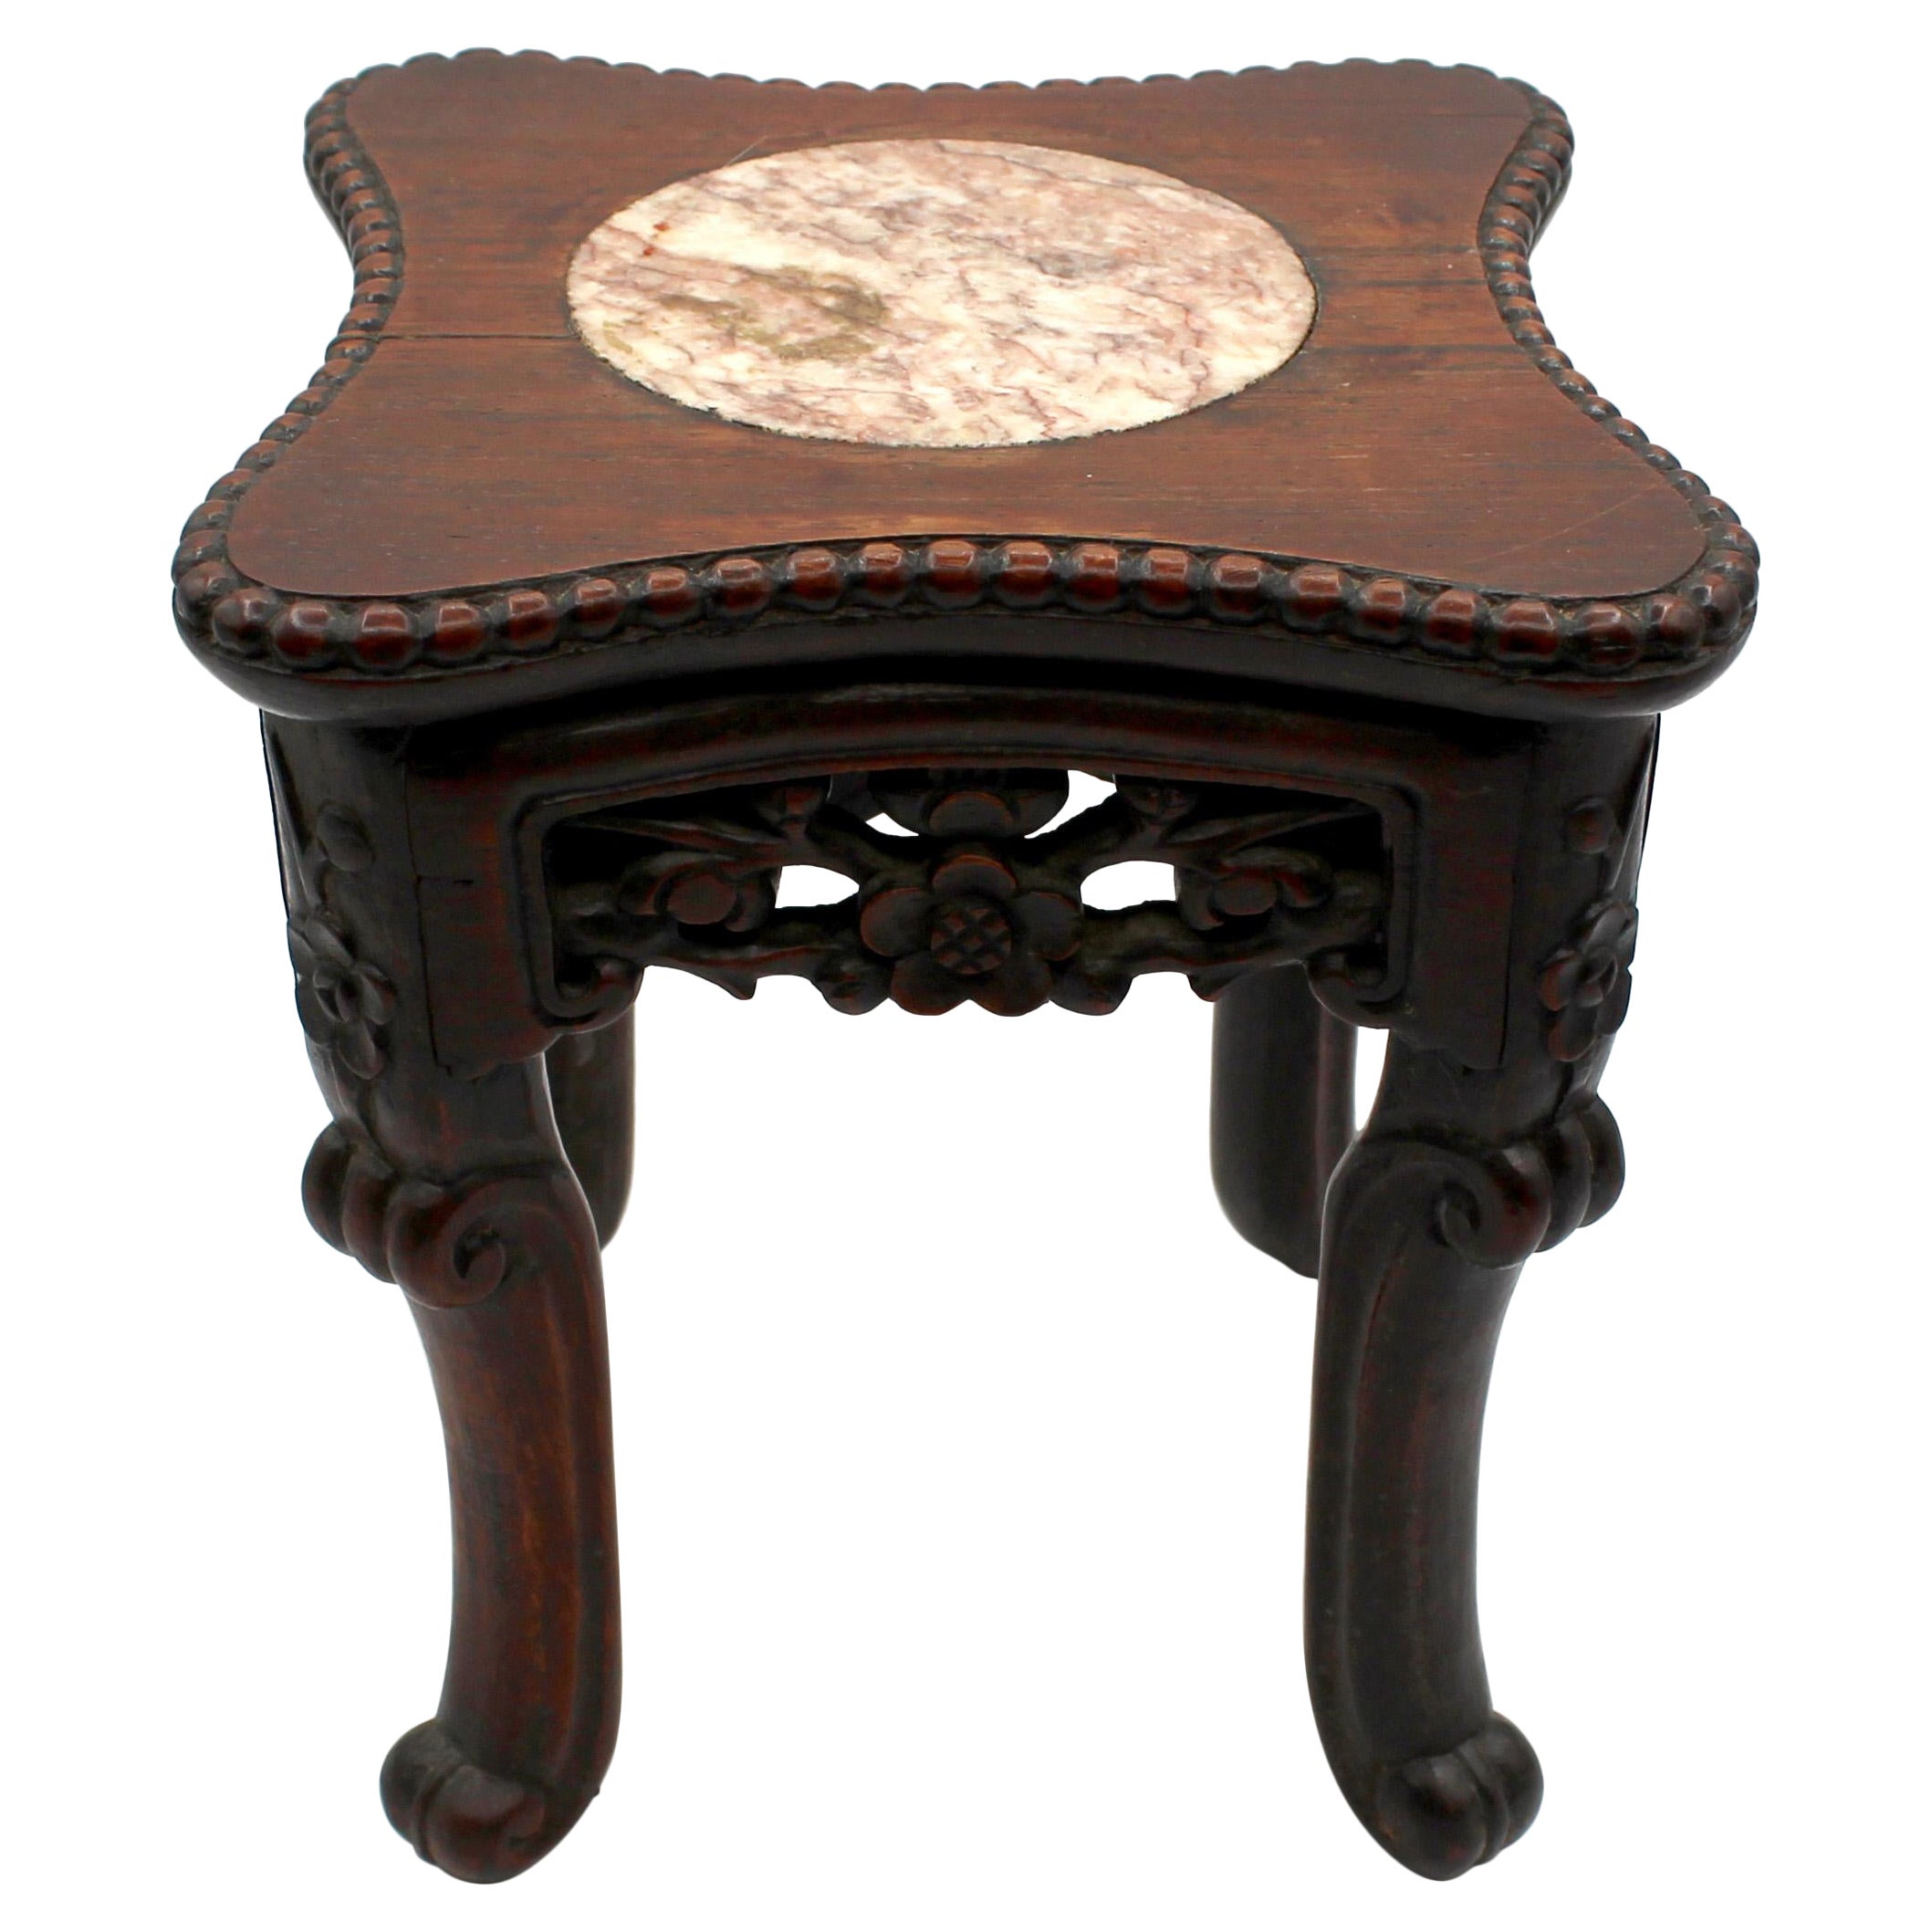 3rd Quarter 19th Century Miniature Taboret Table